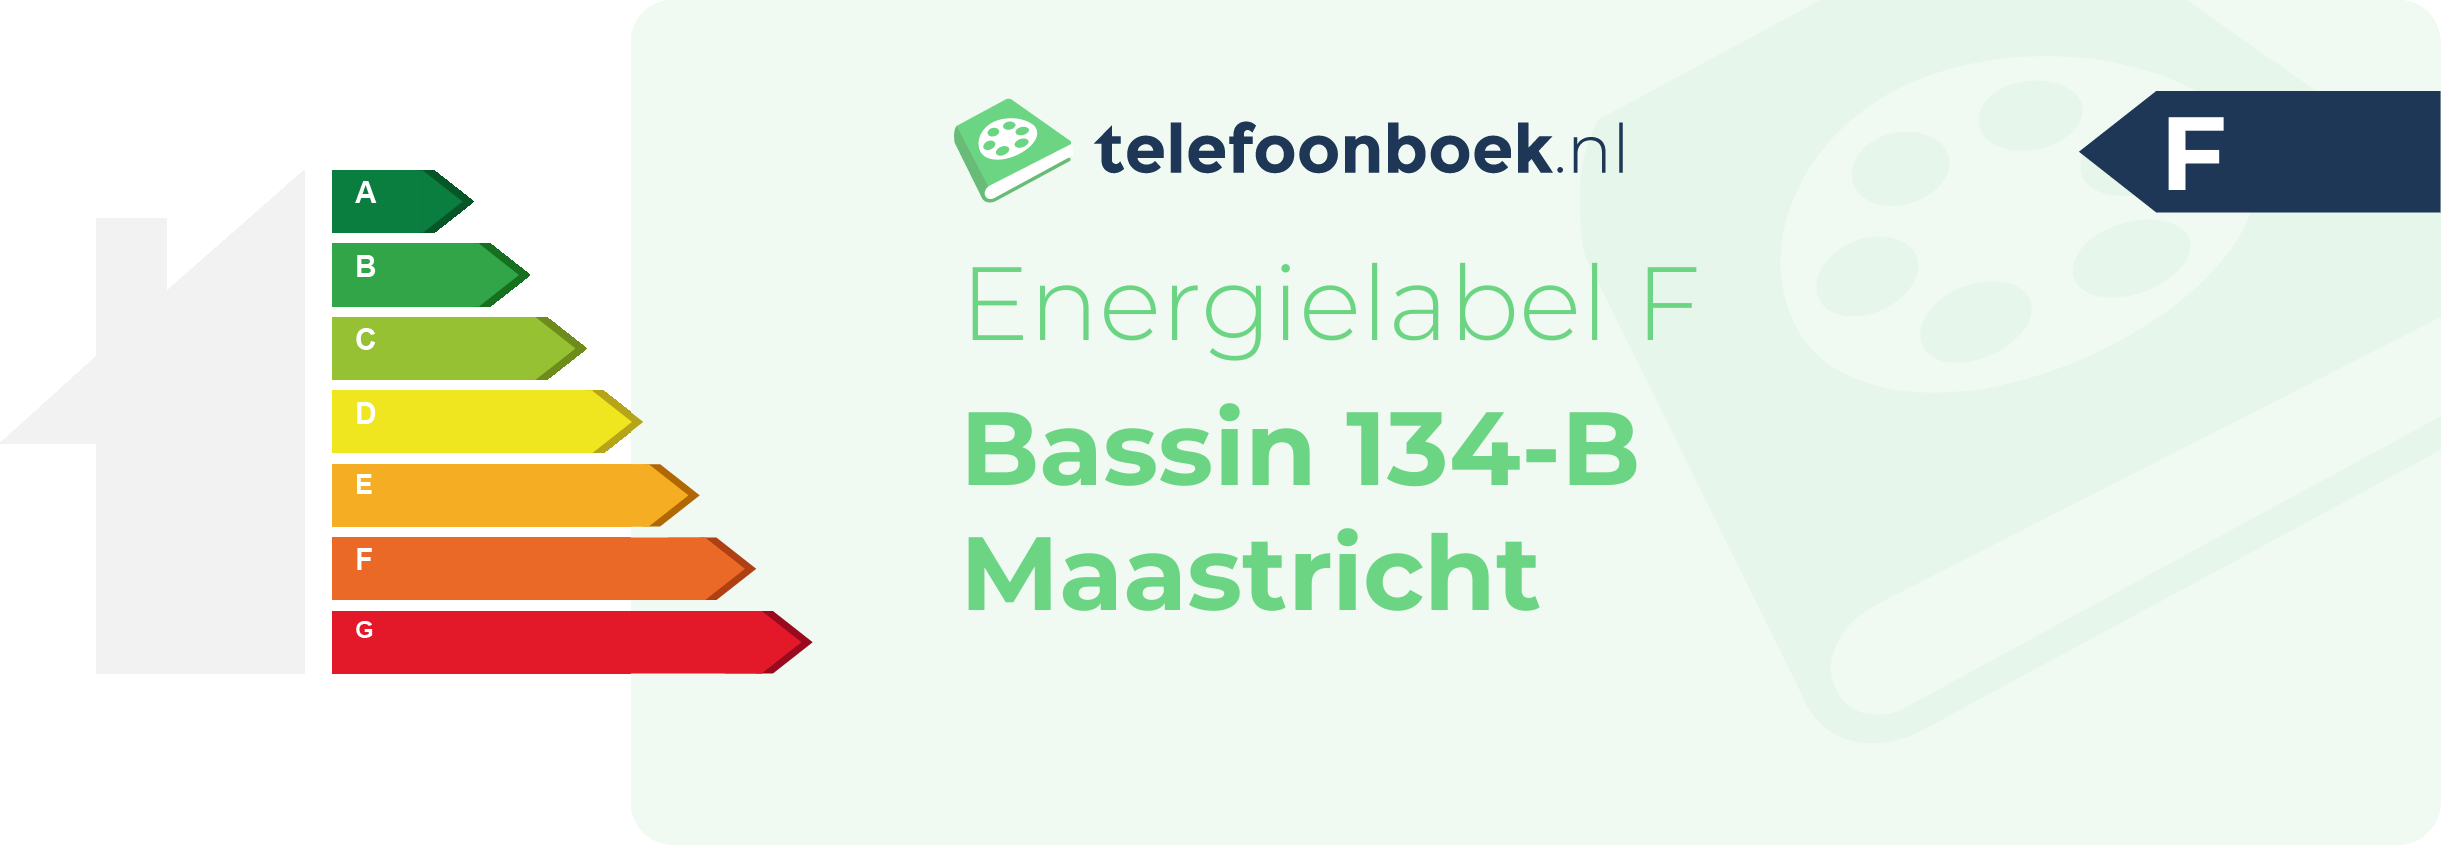 Energielabel Bassin 134-B Maastricht